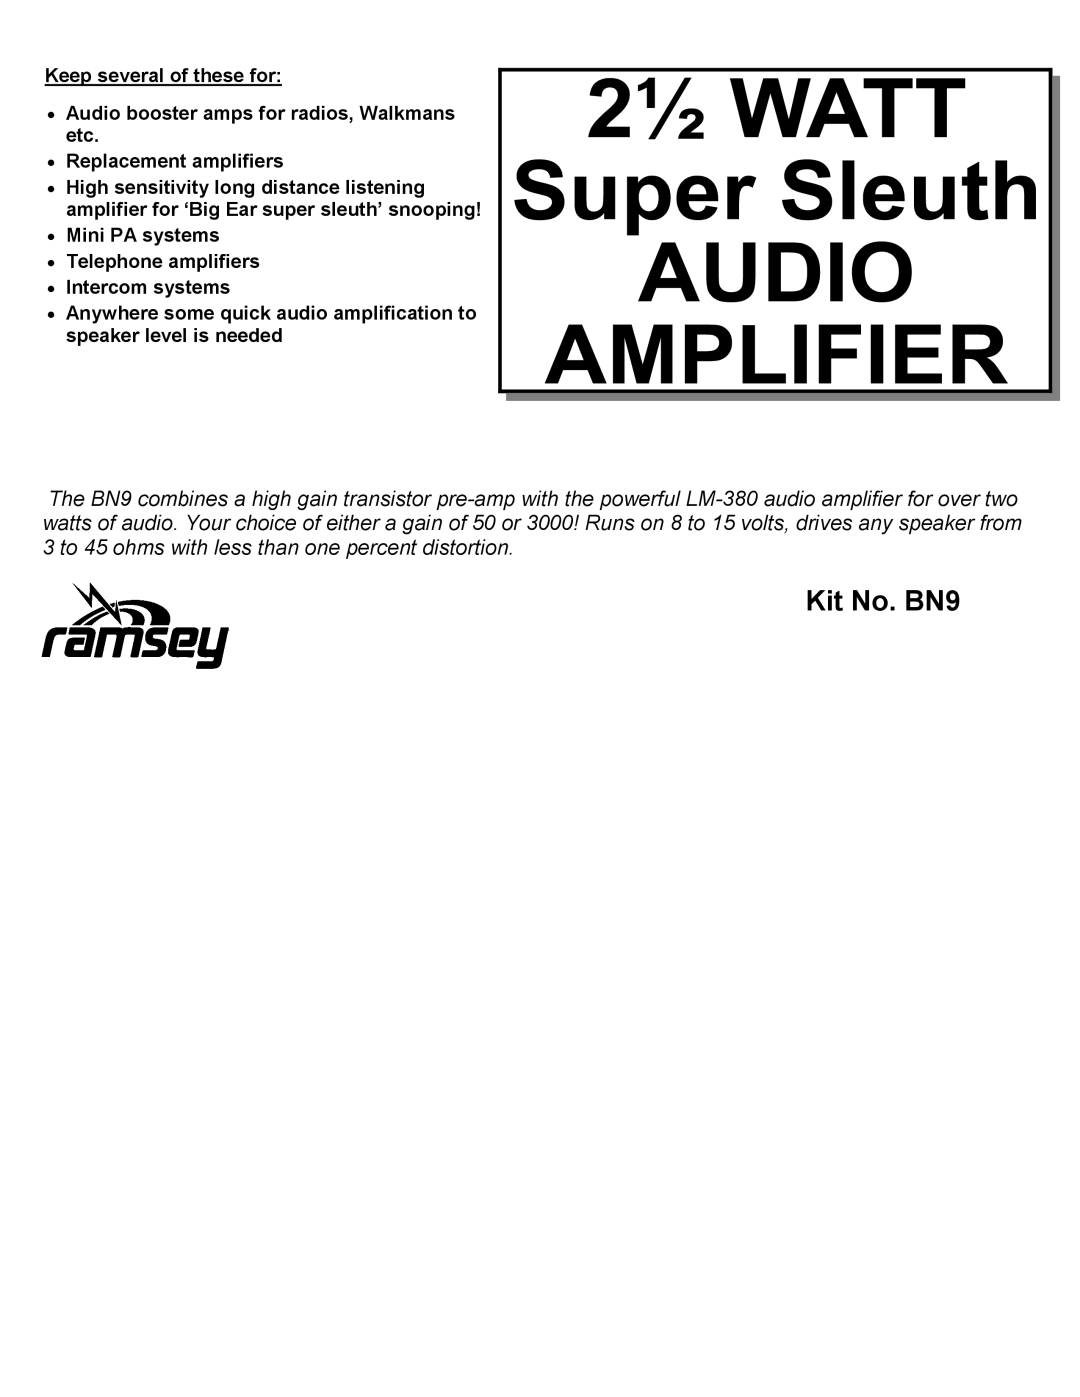 Ramsey Electronics 2 1/2 Watt Super Sleuth Audio Amplifier manual Kit No. BN9 